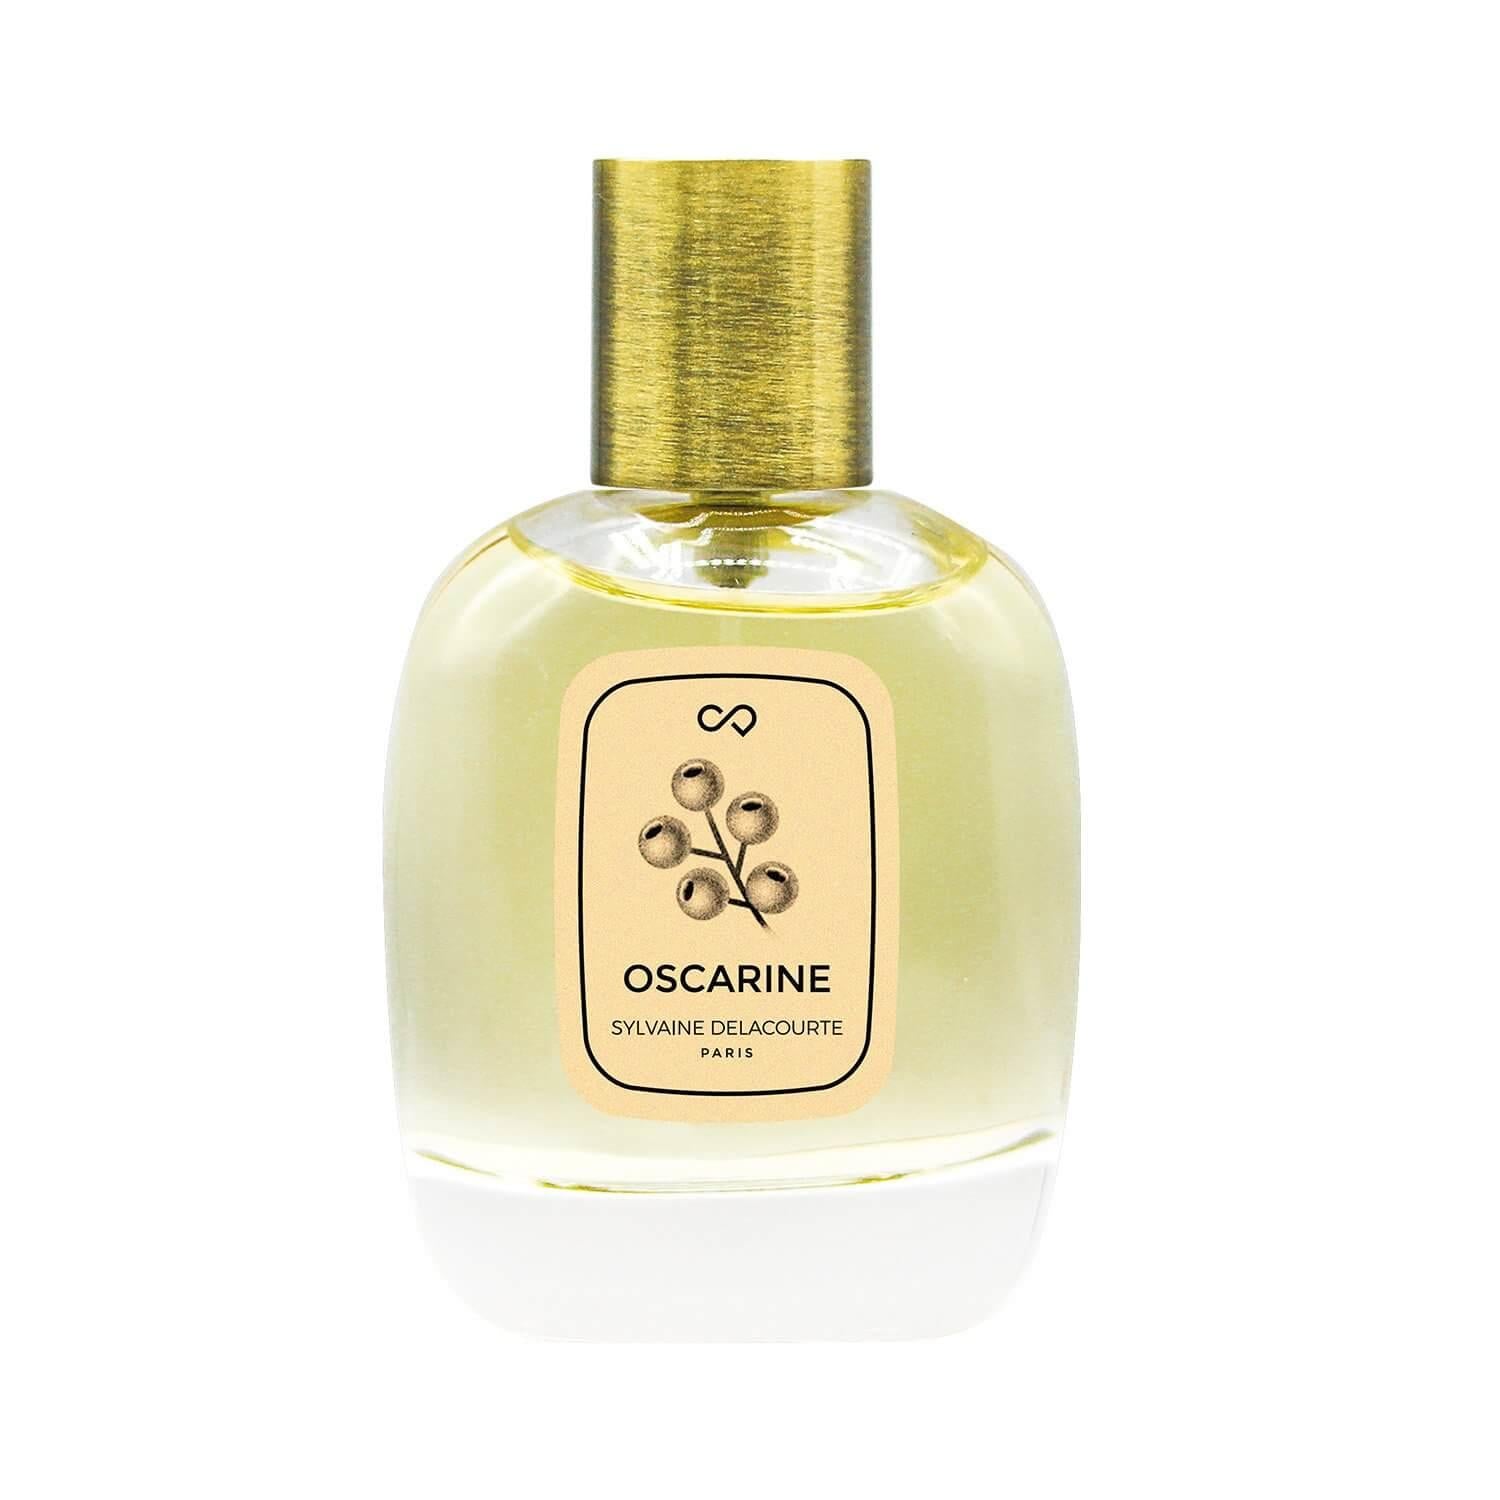 Oscarine by Sylvaine Delacourte at Indigo Perfumery